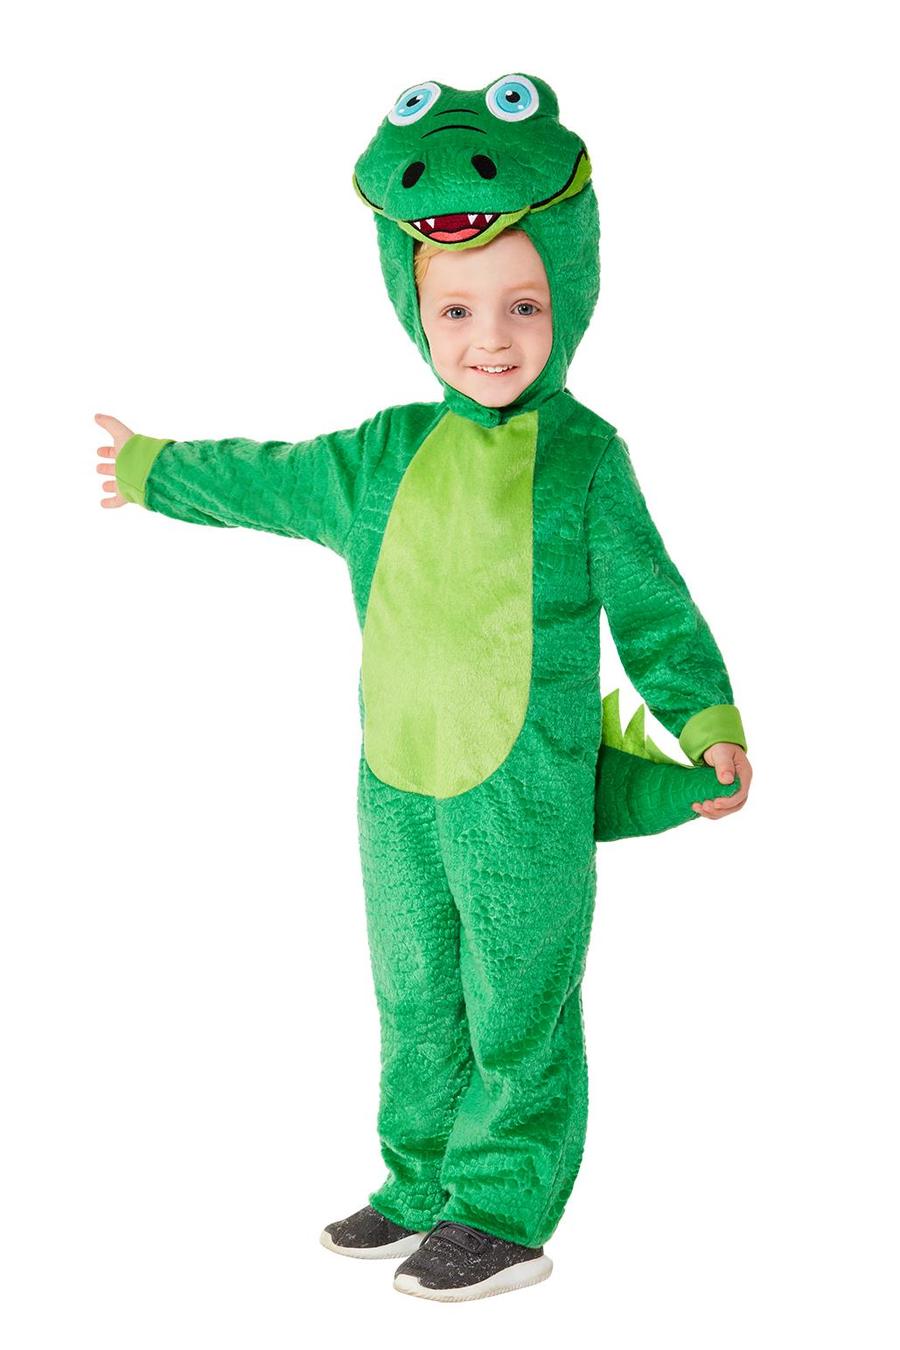 Toddler Crocodile Costume